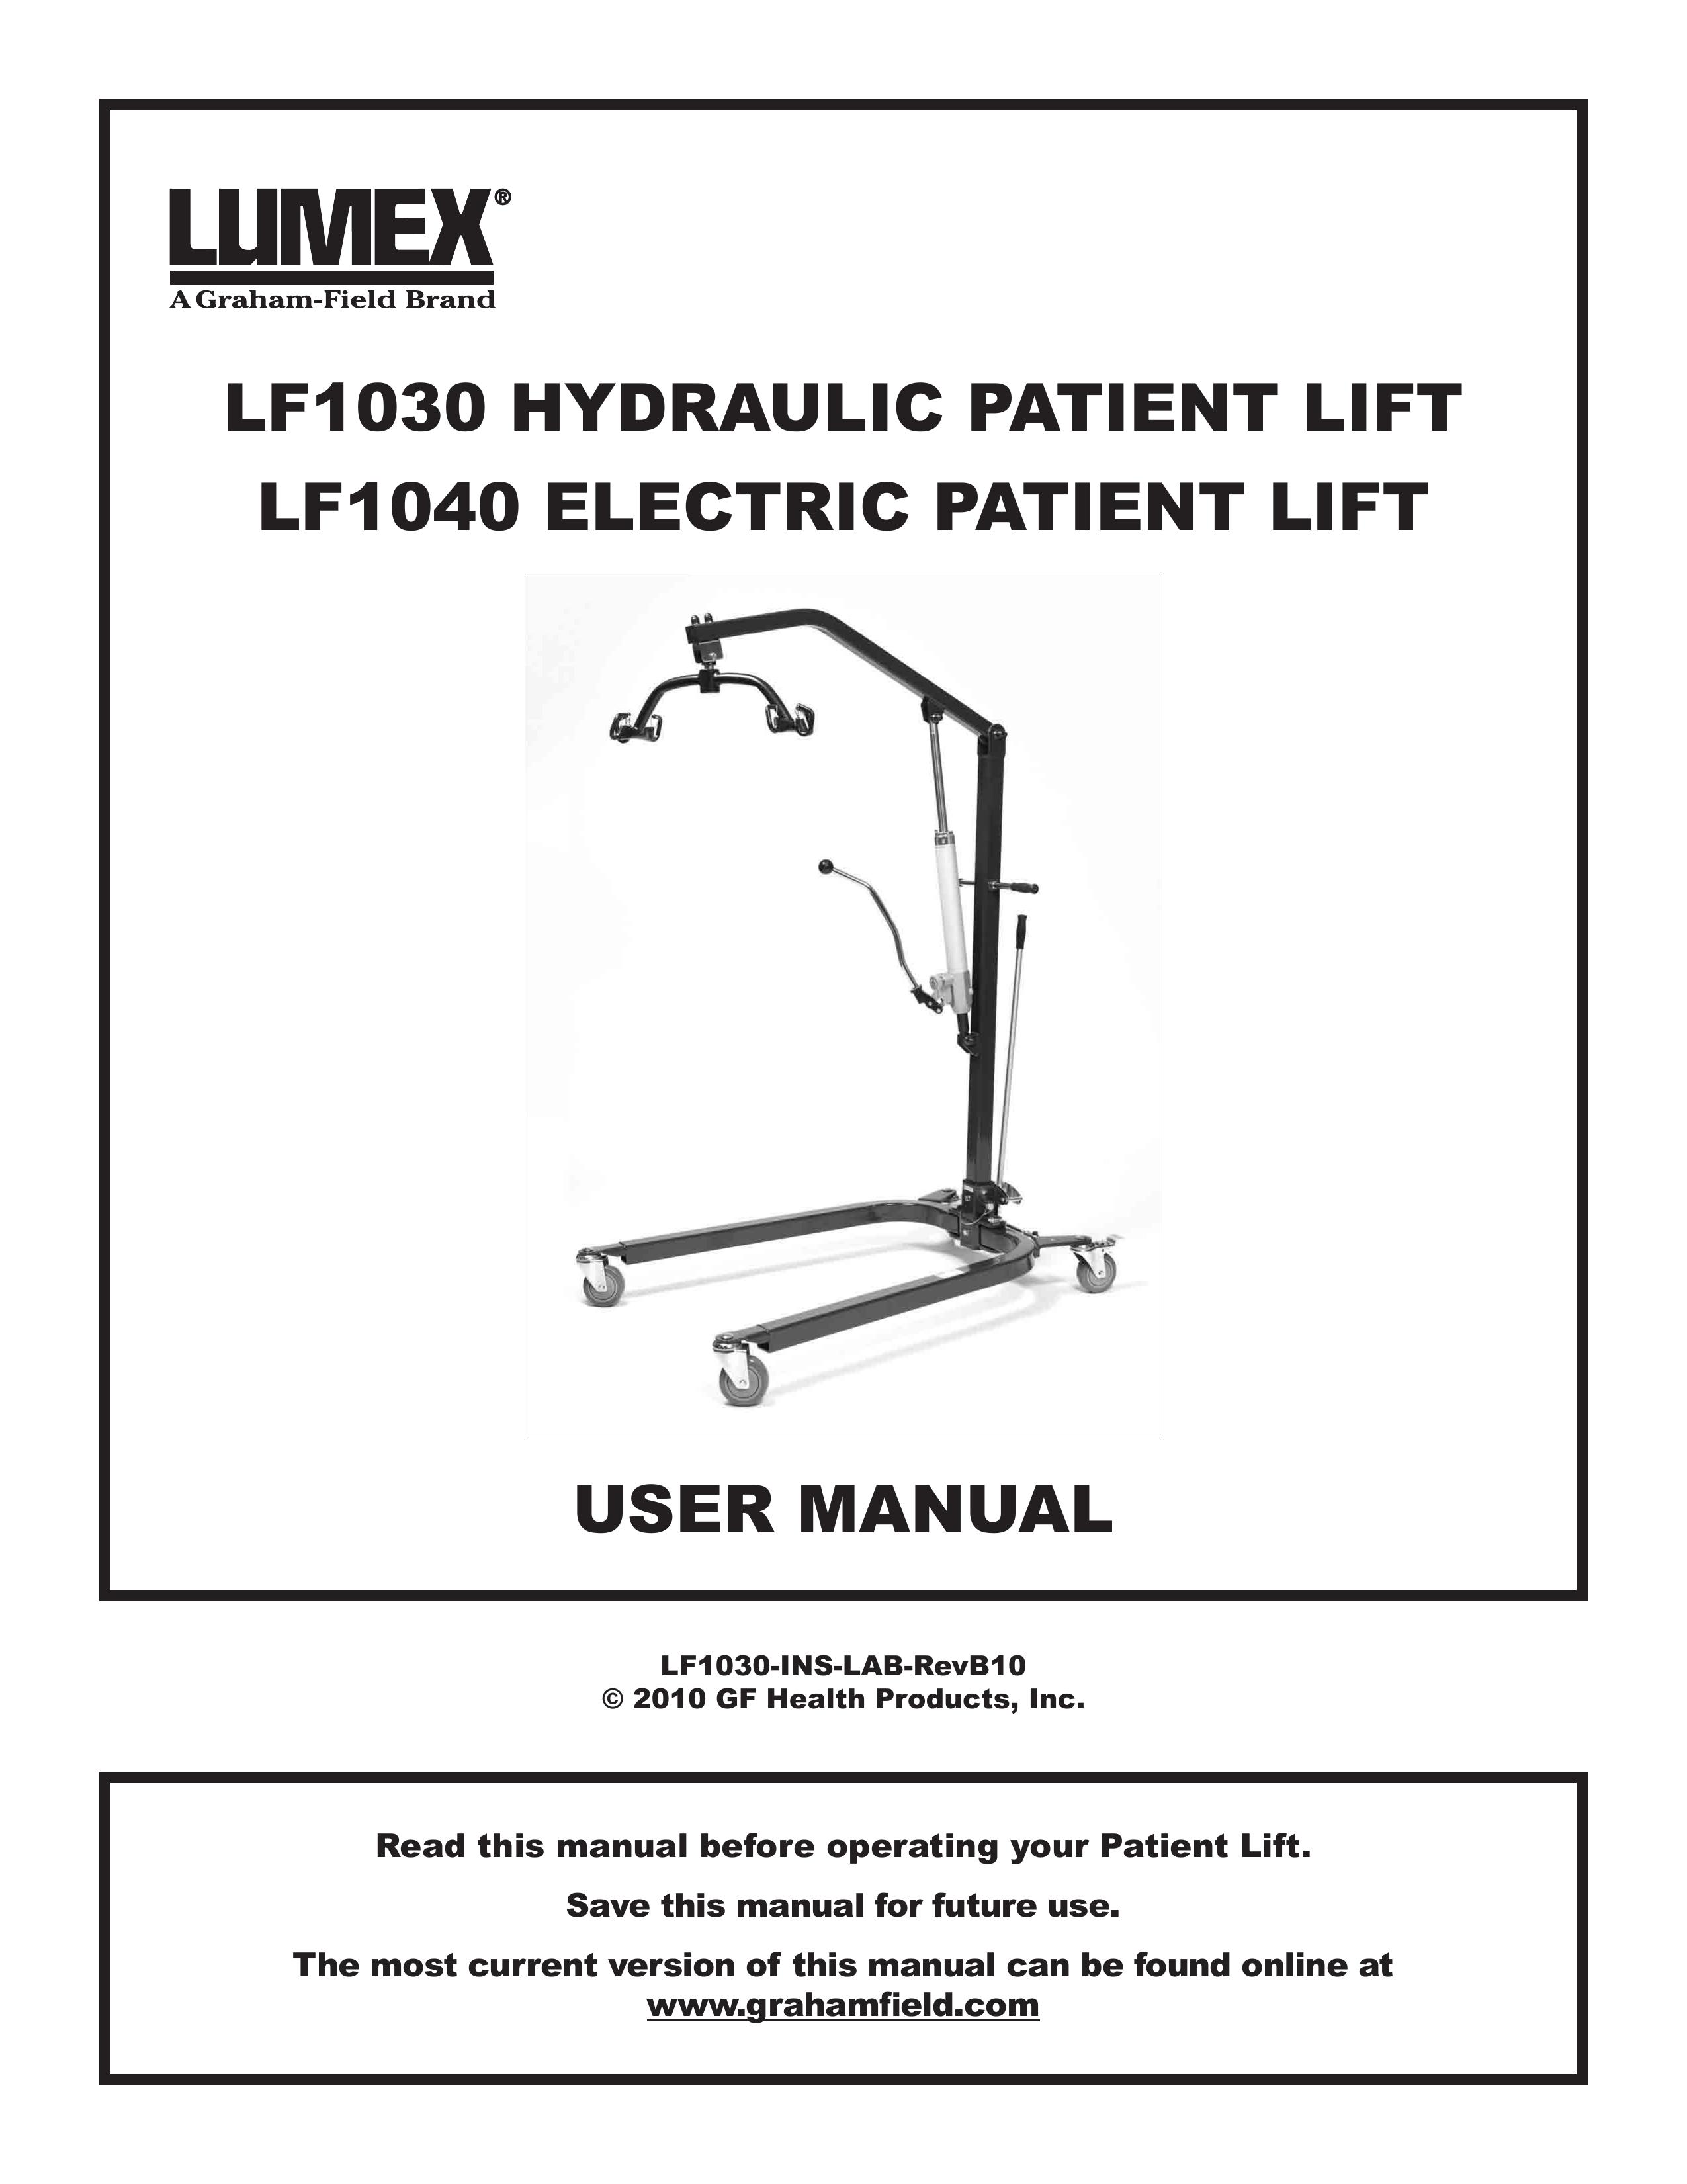 Graham Field LF1040 Personal Lift User Manual